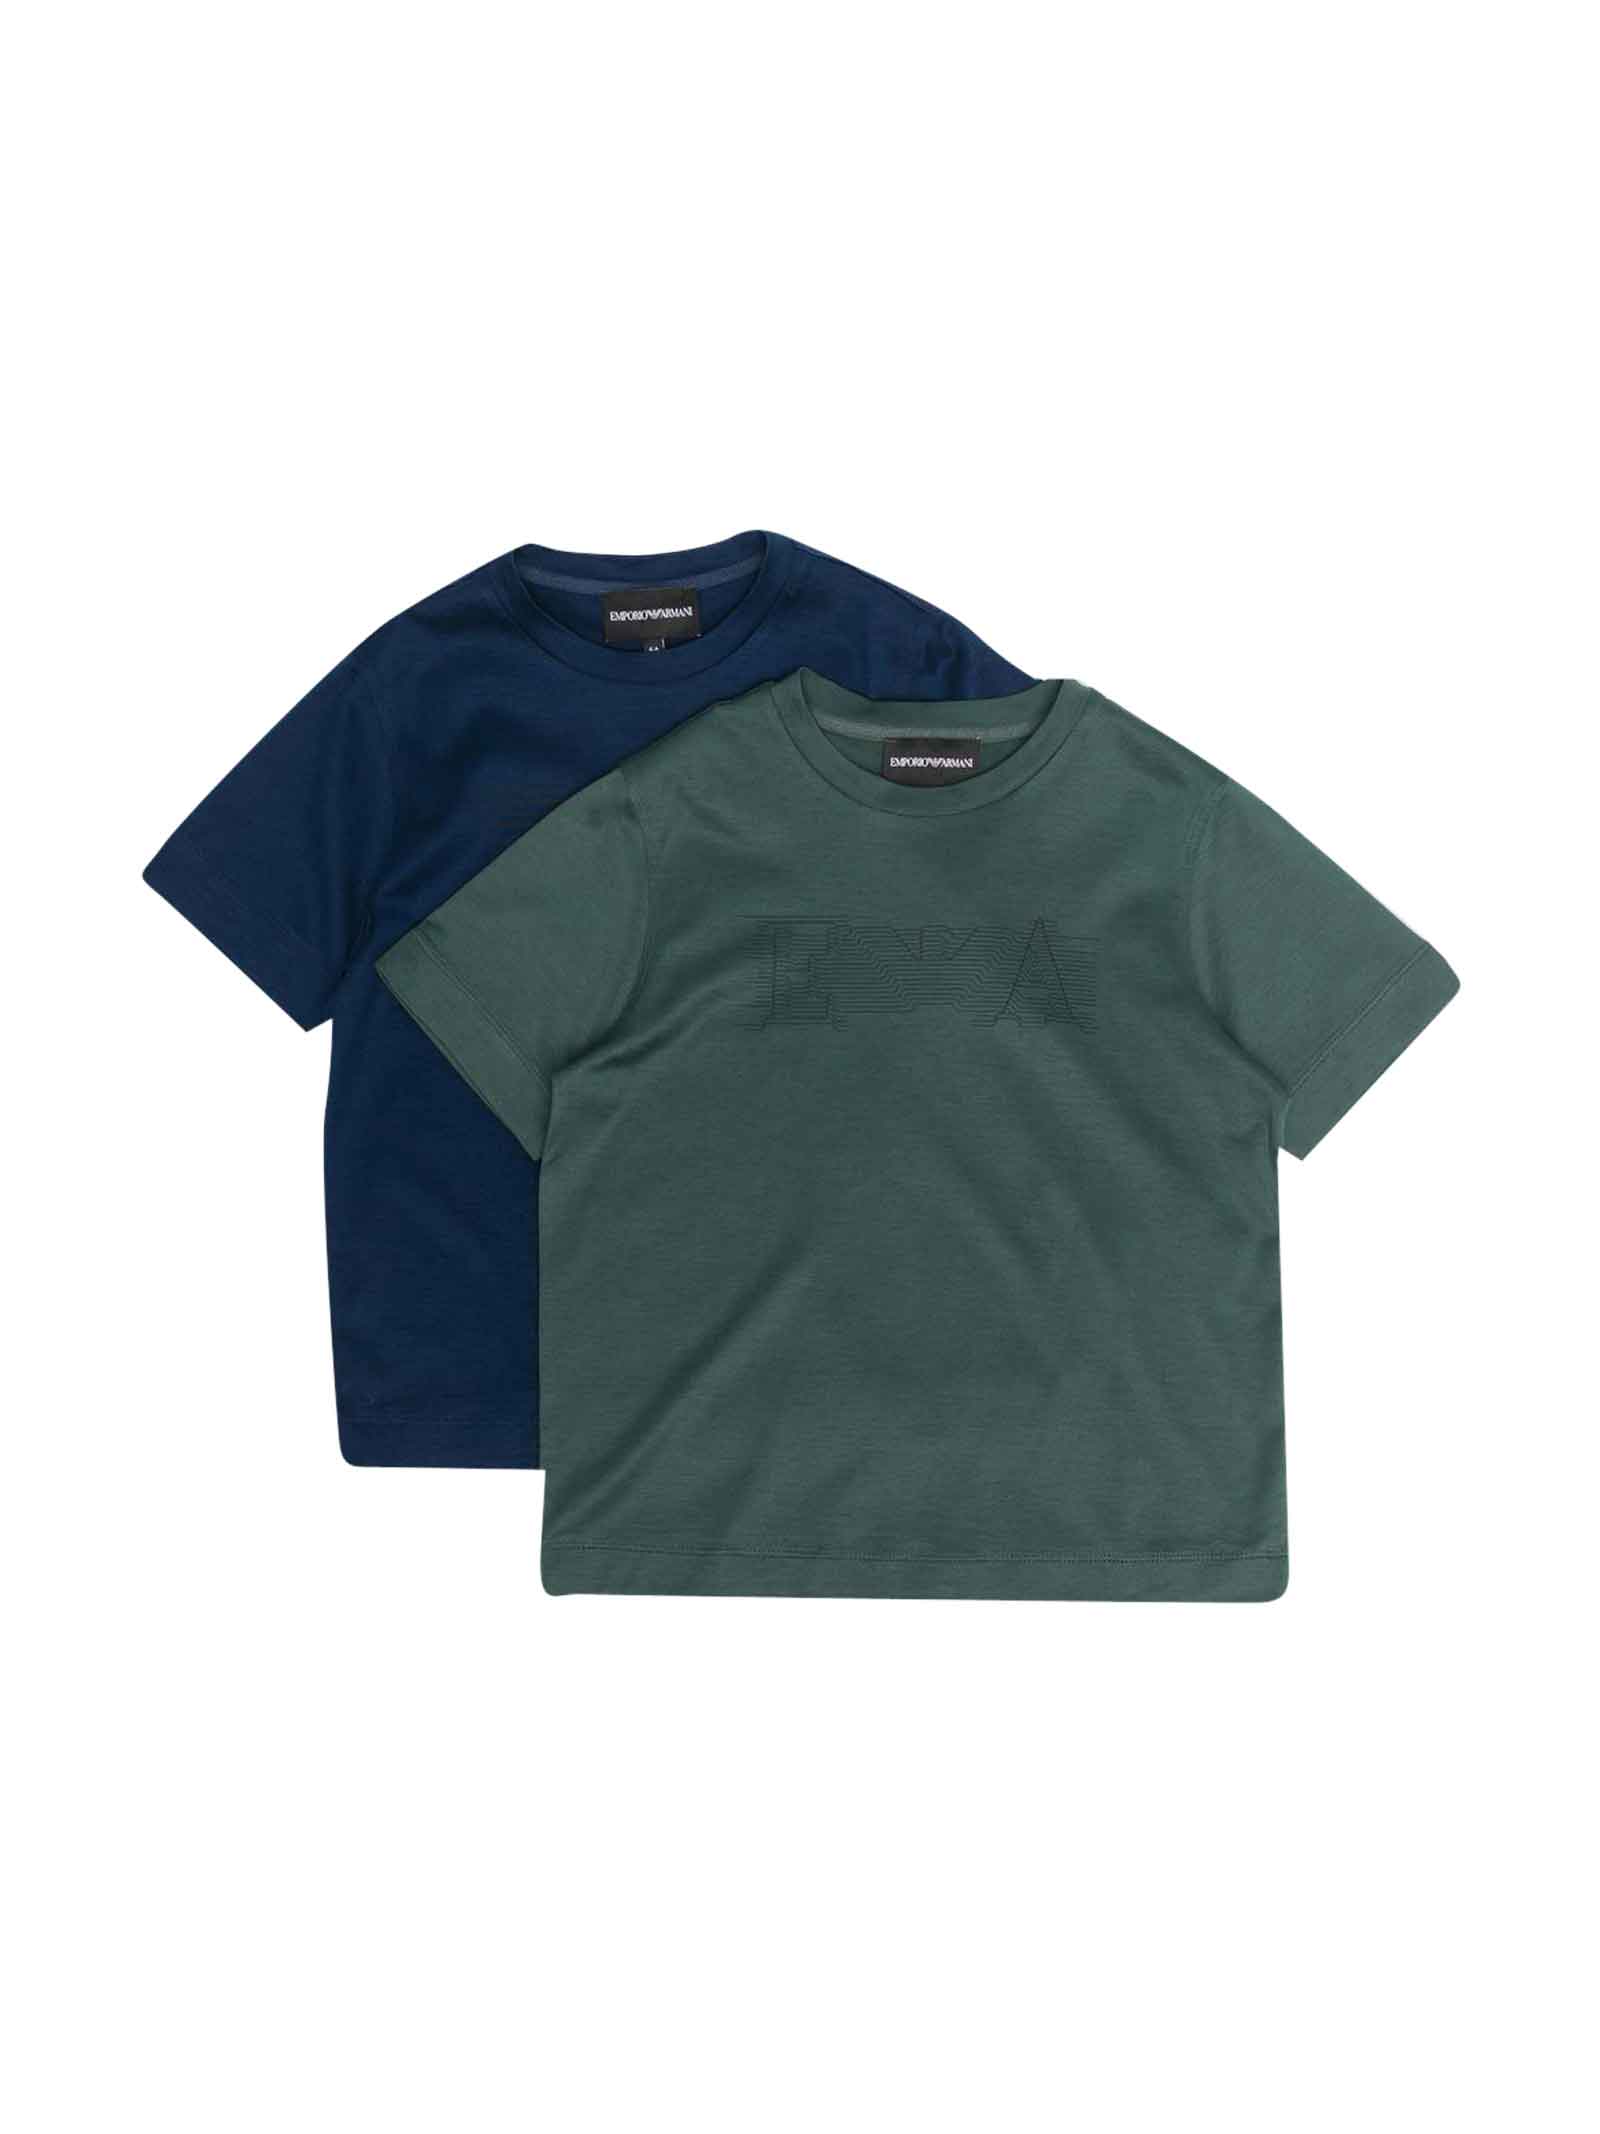 Emporio Armani Set 2 Blue / Green T-shirt Boy